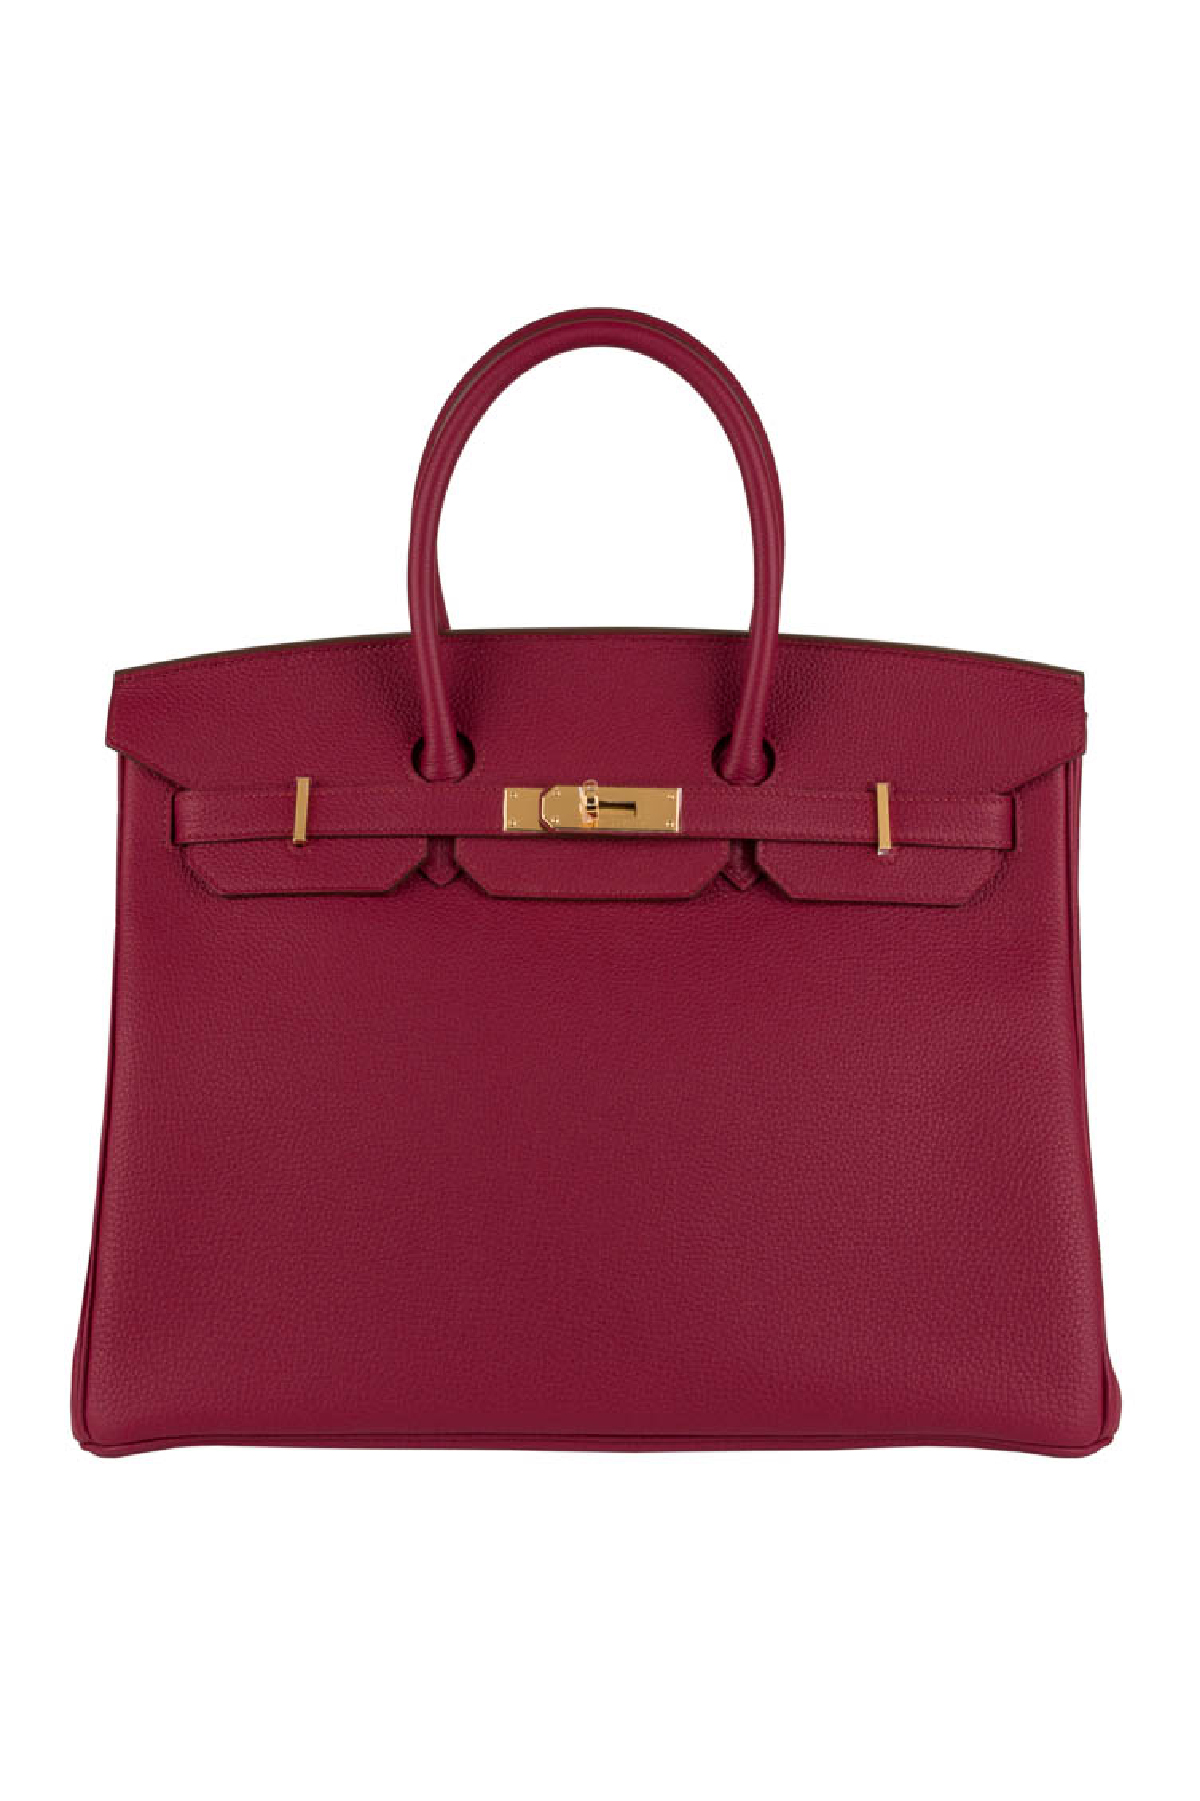 Hermès Birkin 35 Ruby Rubis Togo with Gold Hardware - Bags - Kabinet Privé